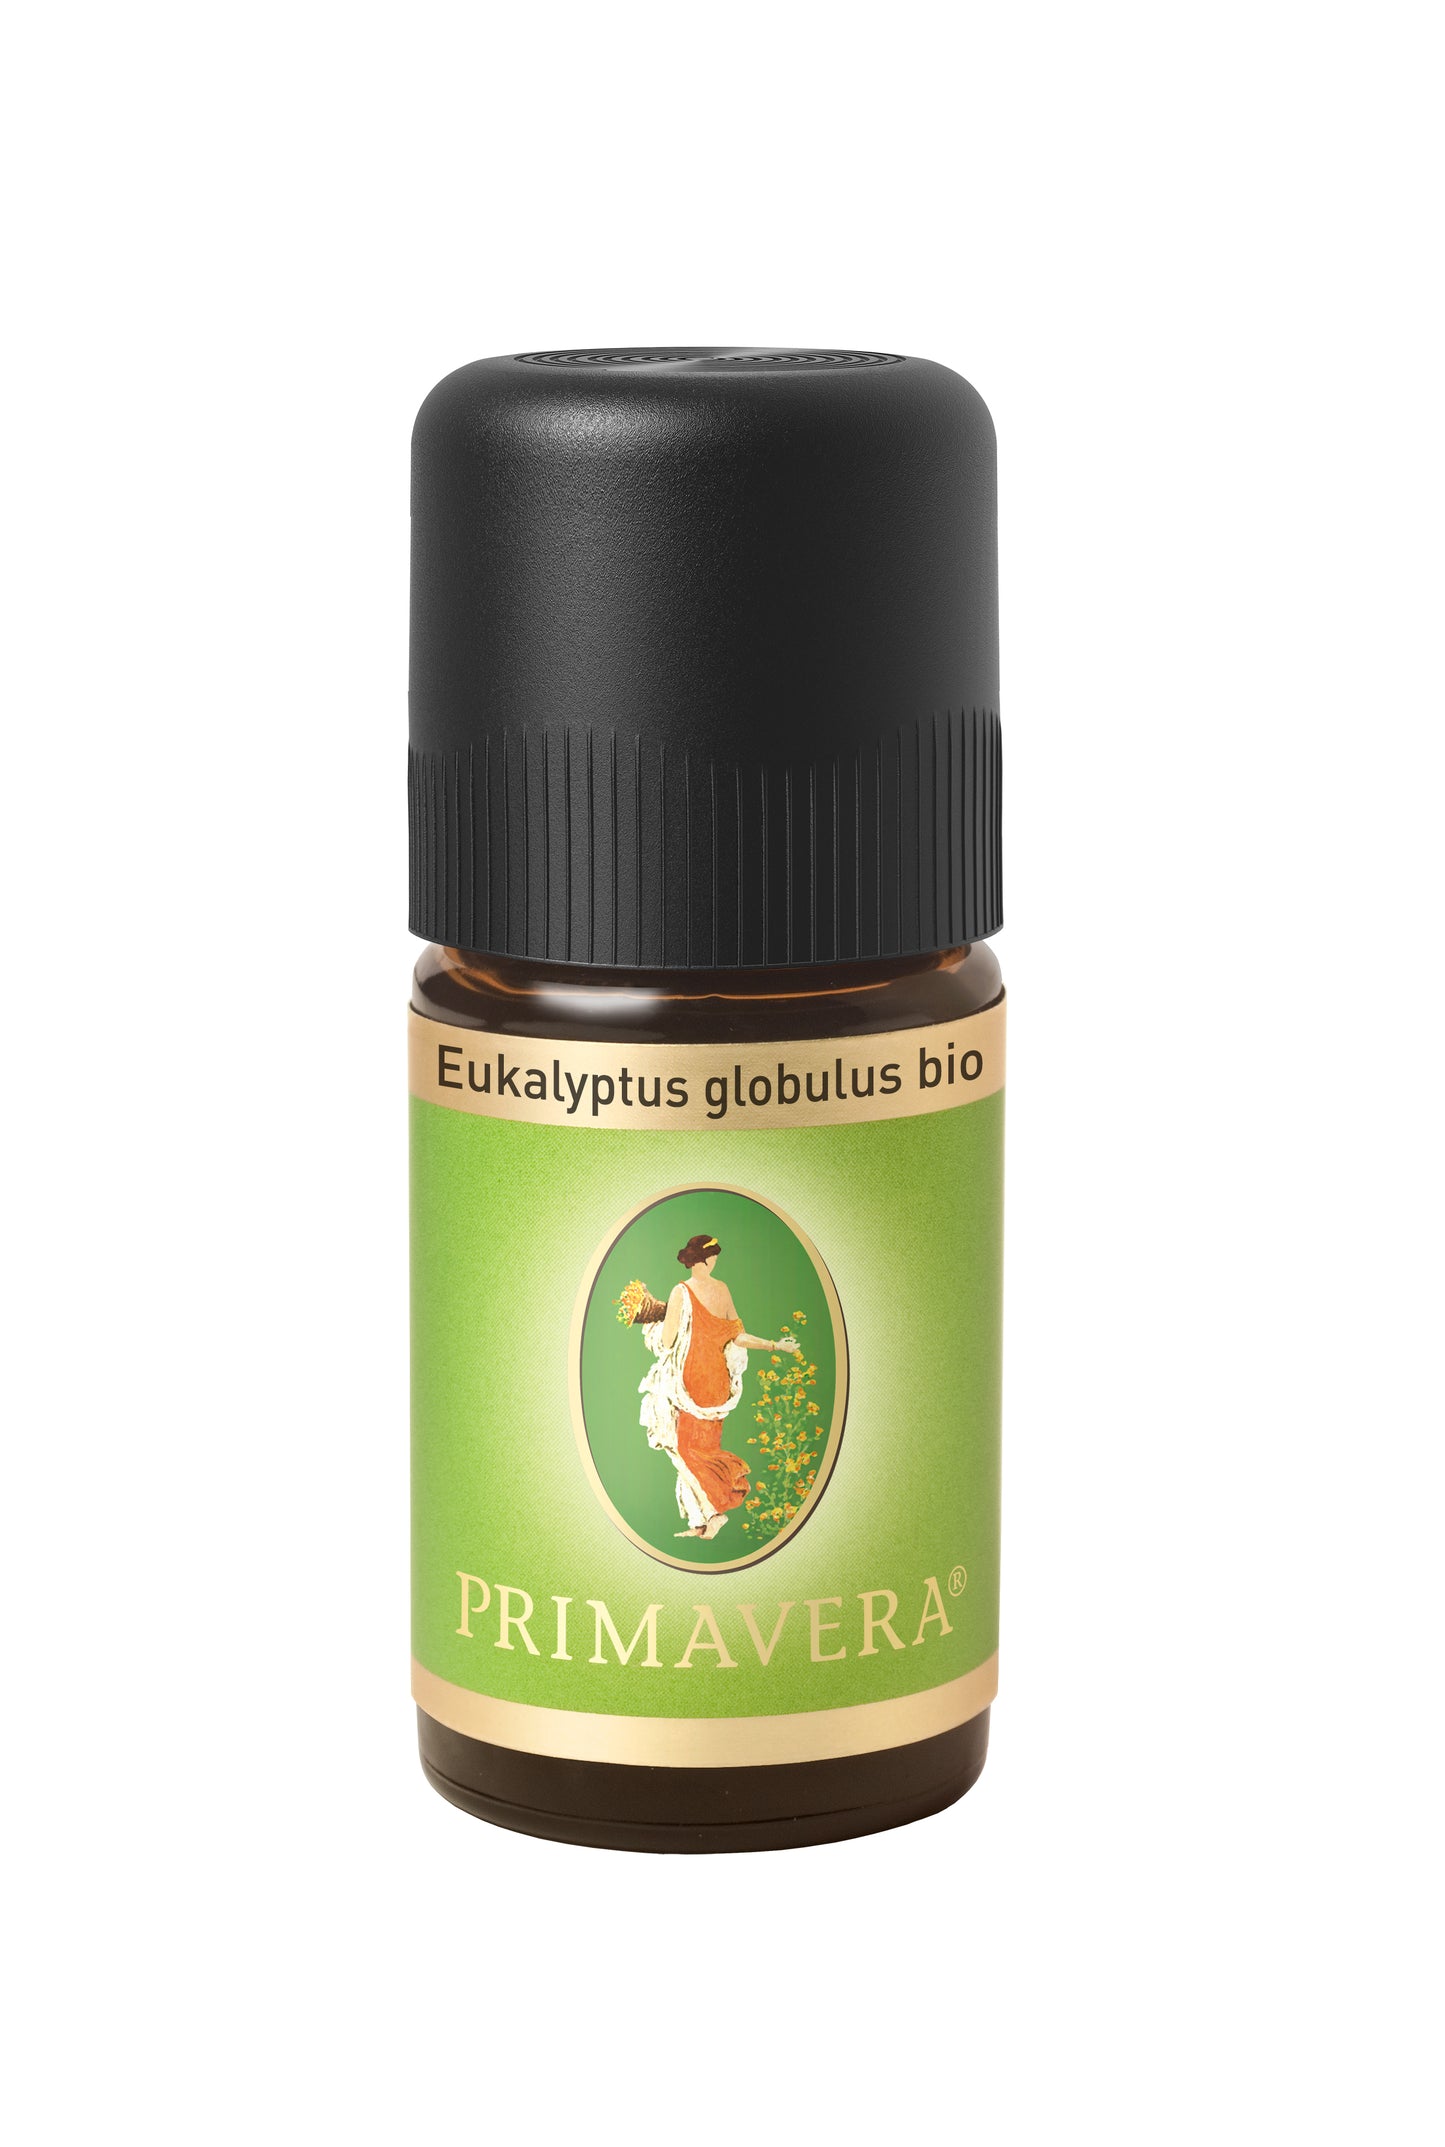 Primavera - Eukalyptus globulus bio* 5 ml